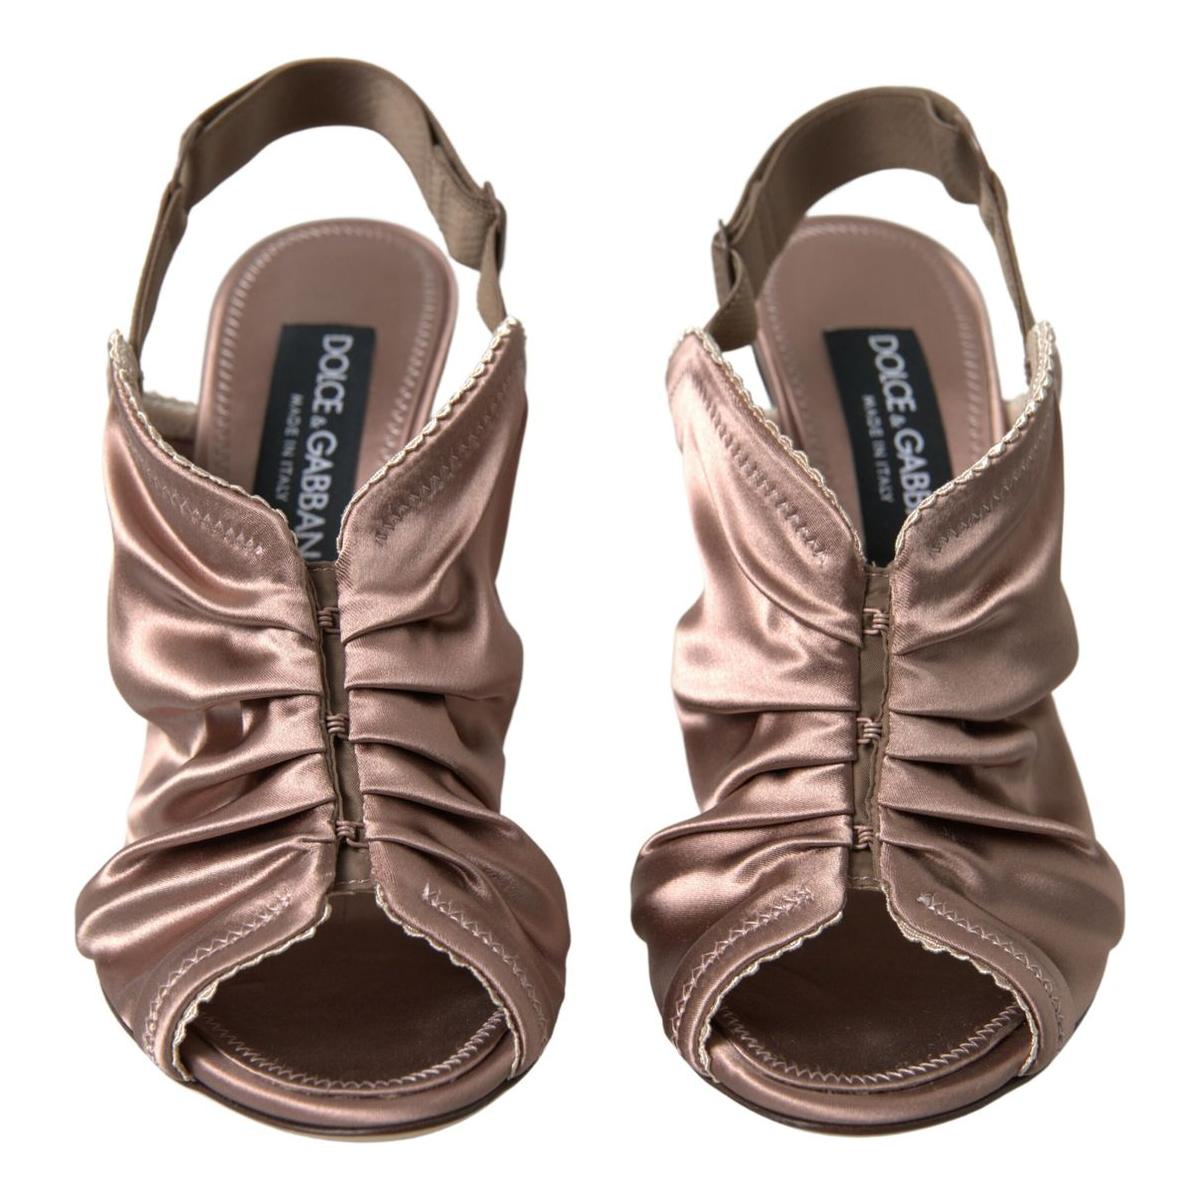 Dolce & Gabbana Elegant Slingback Stiletto Heels in Light Brown light-brown-slingback-corset-style-fastening-stiletto-heels 465A8686-scaled-c8fb3d06-938_c1fe996e-cddb-4308-be3a-d07d7fcc854a.jpg